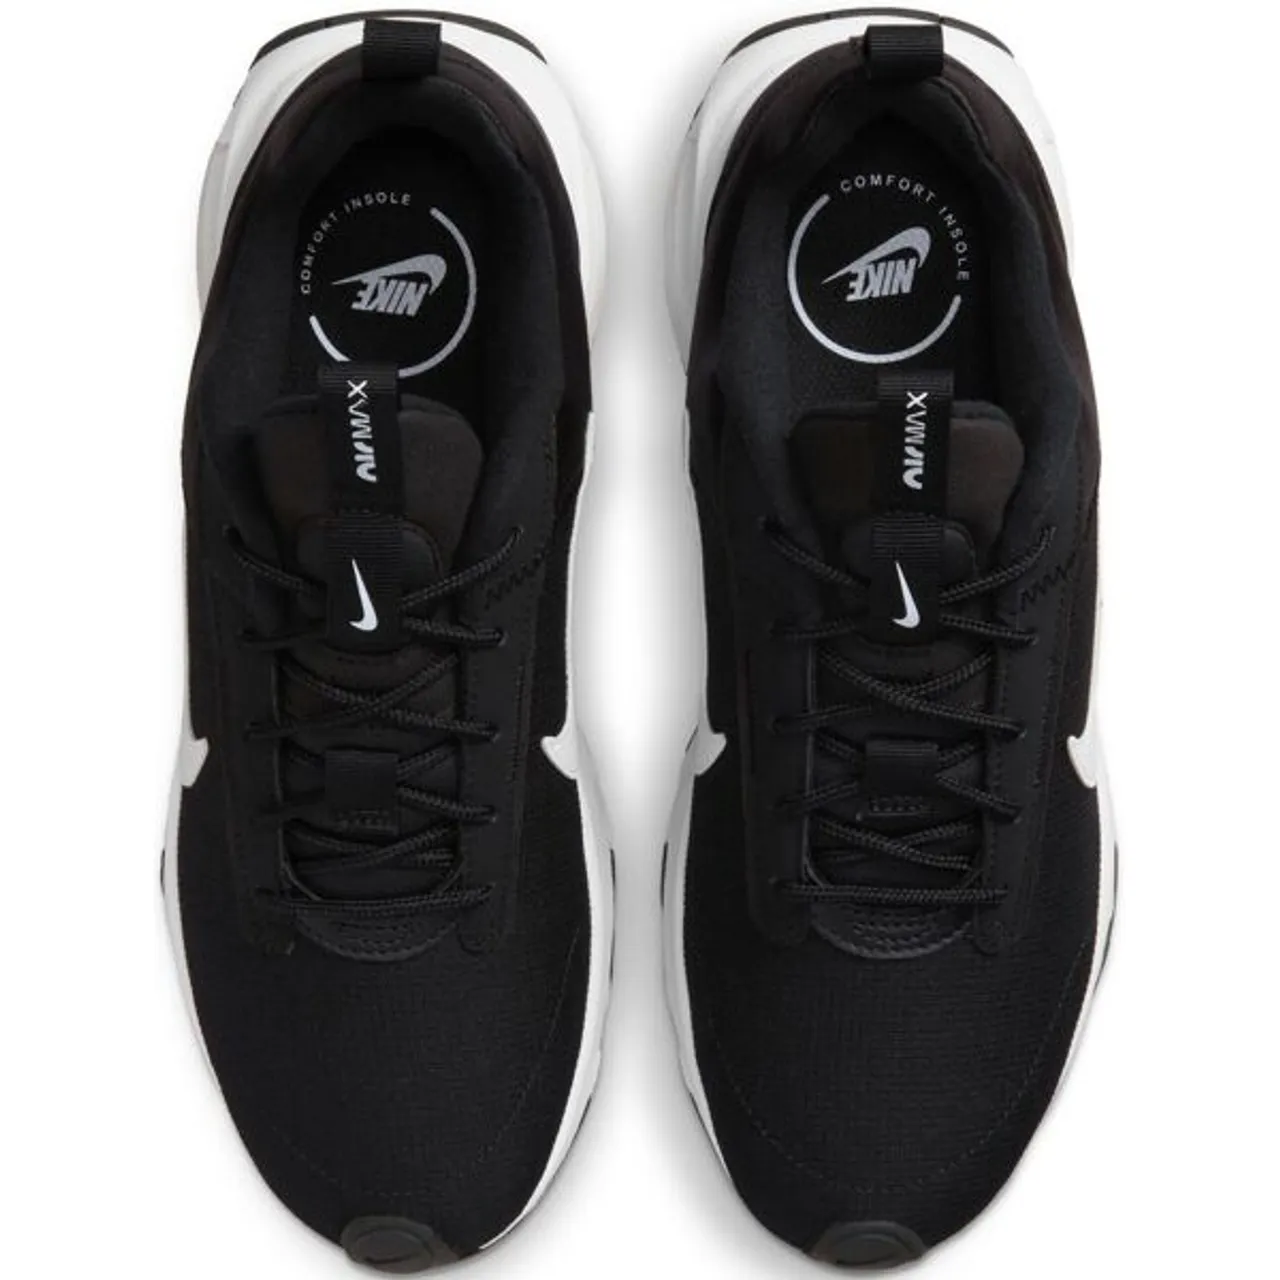 Sneaker NIKE SPORTSWEAR "Air Max INTRLK Lite" Gr. 36,5, schwarz-weiß (black, white) Schuhe Sneaker